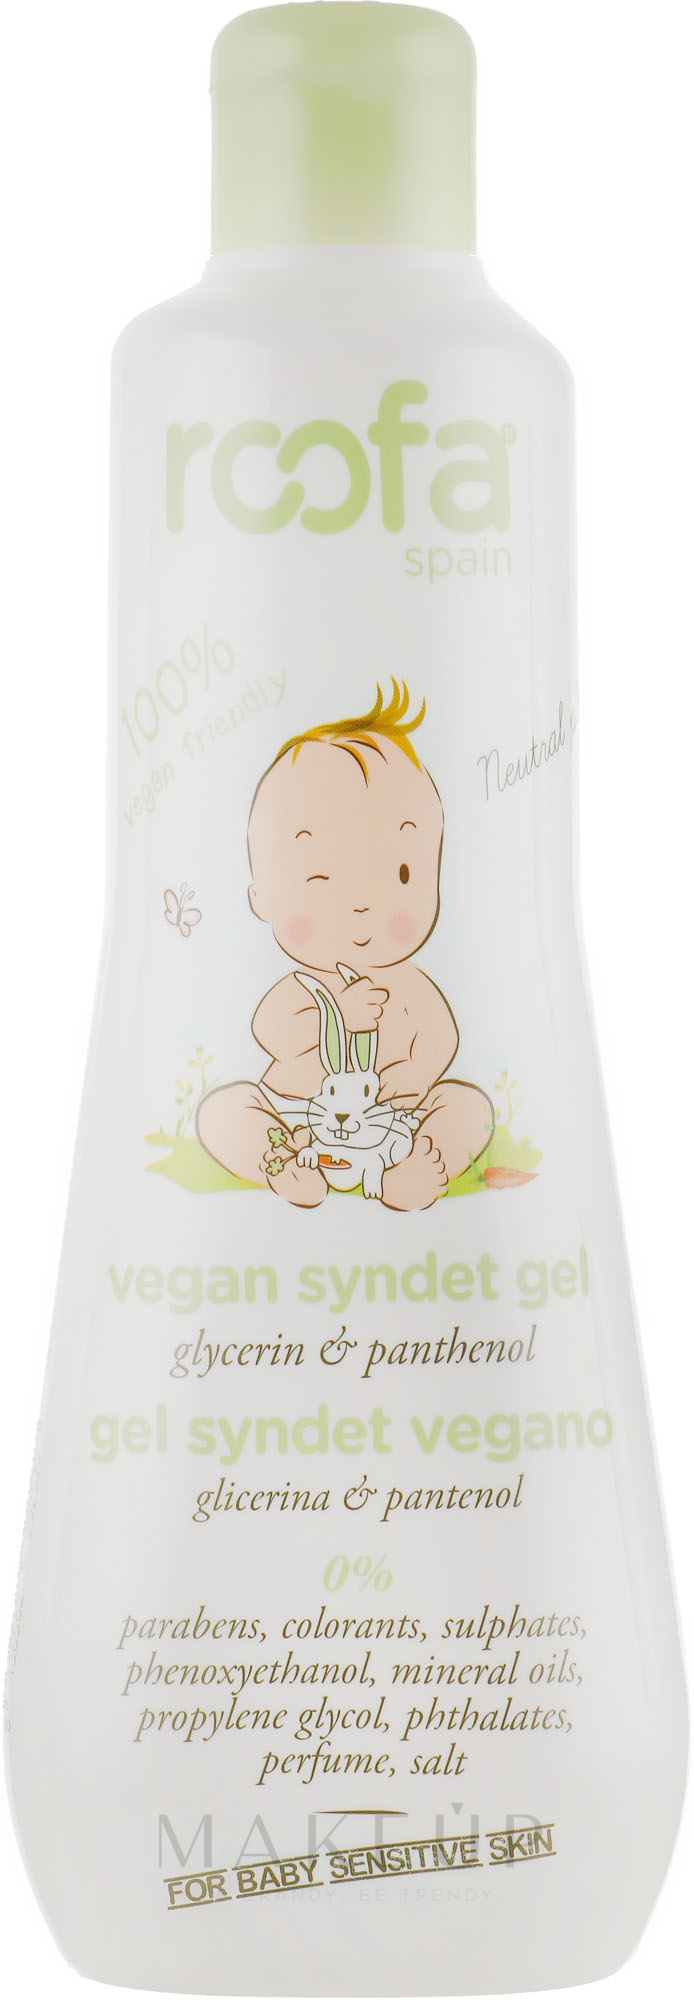 Veganes Badegel für Babys - Roofa Syndet Gel — Bild 300 ml